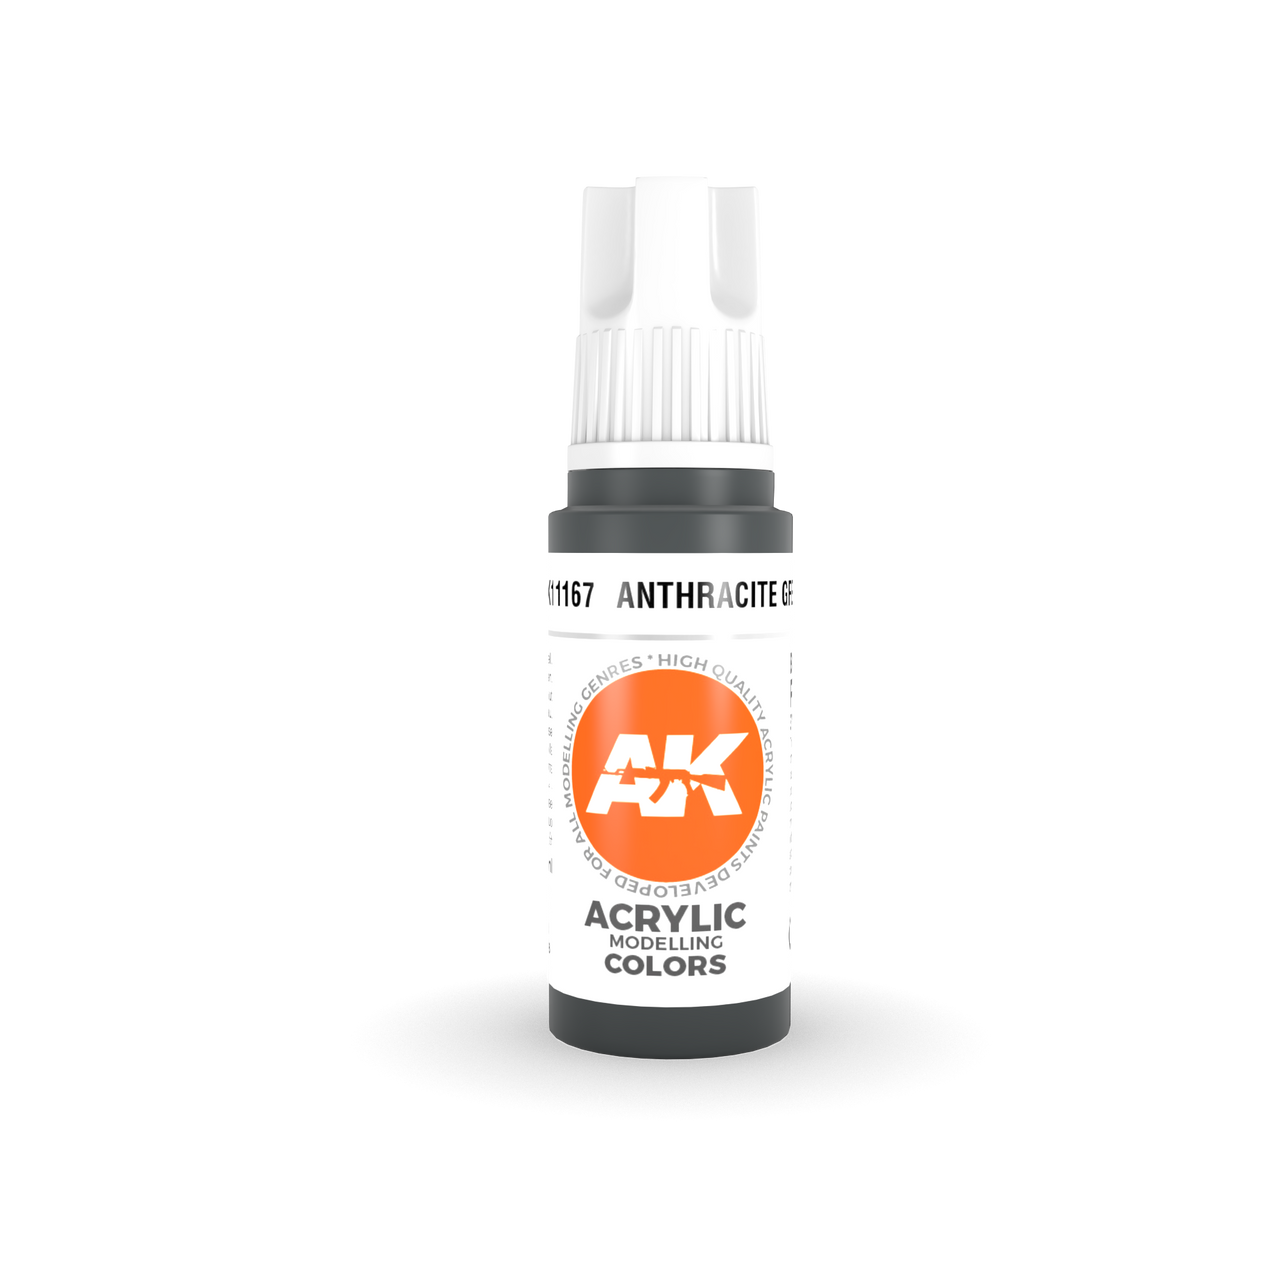 Anthracite Grey - AK 3Gen Acrylic